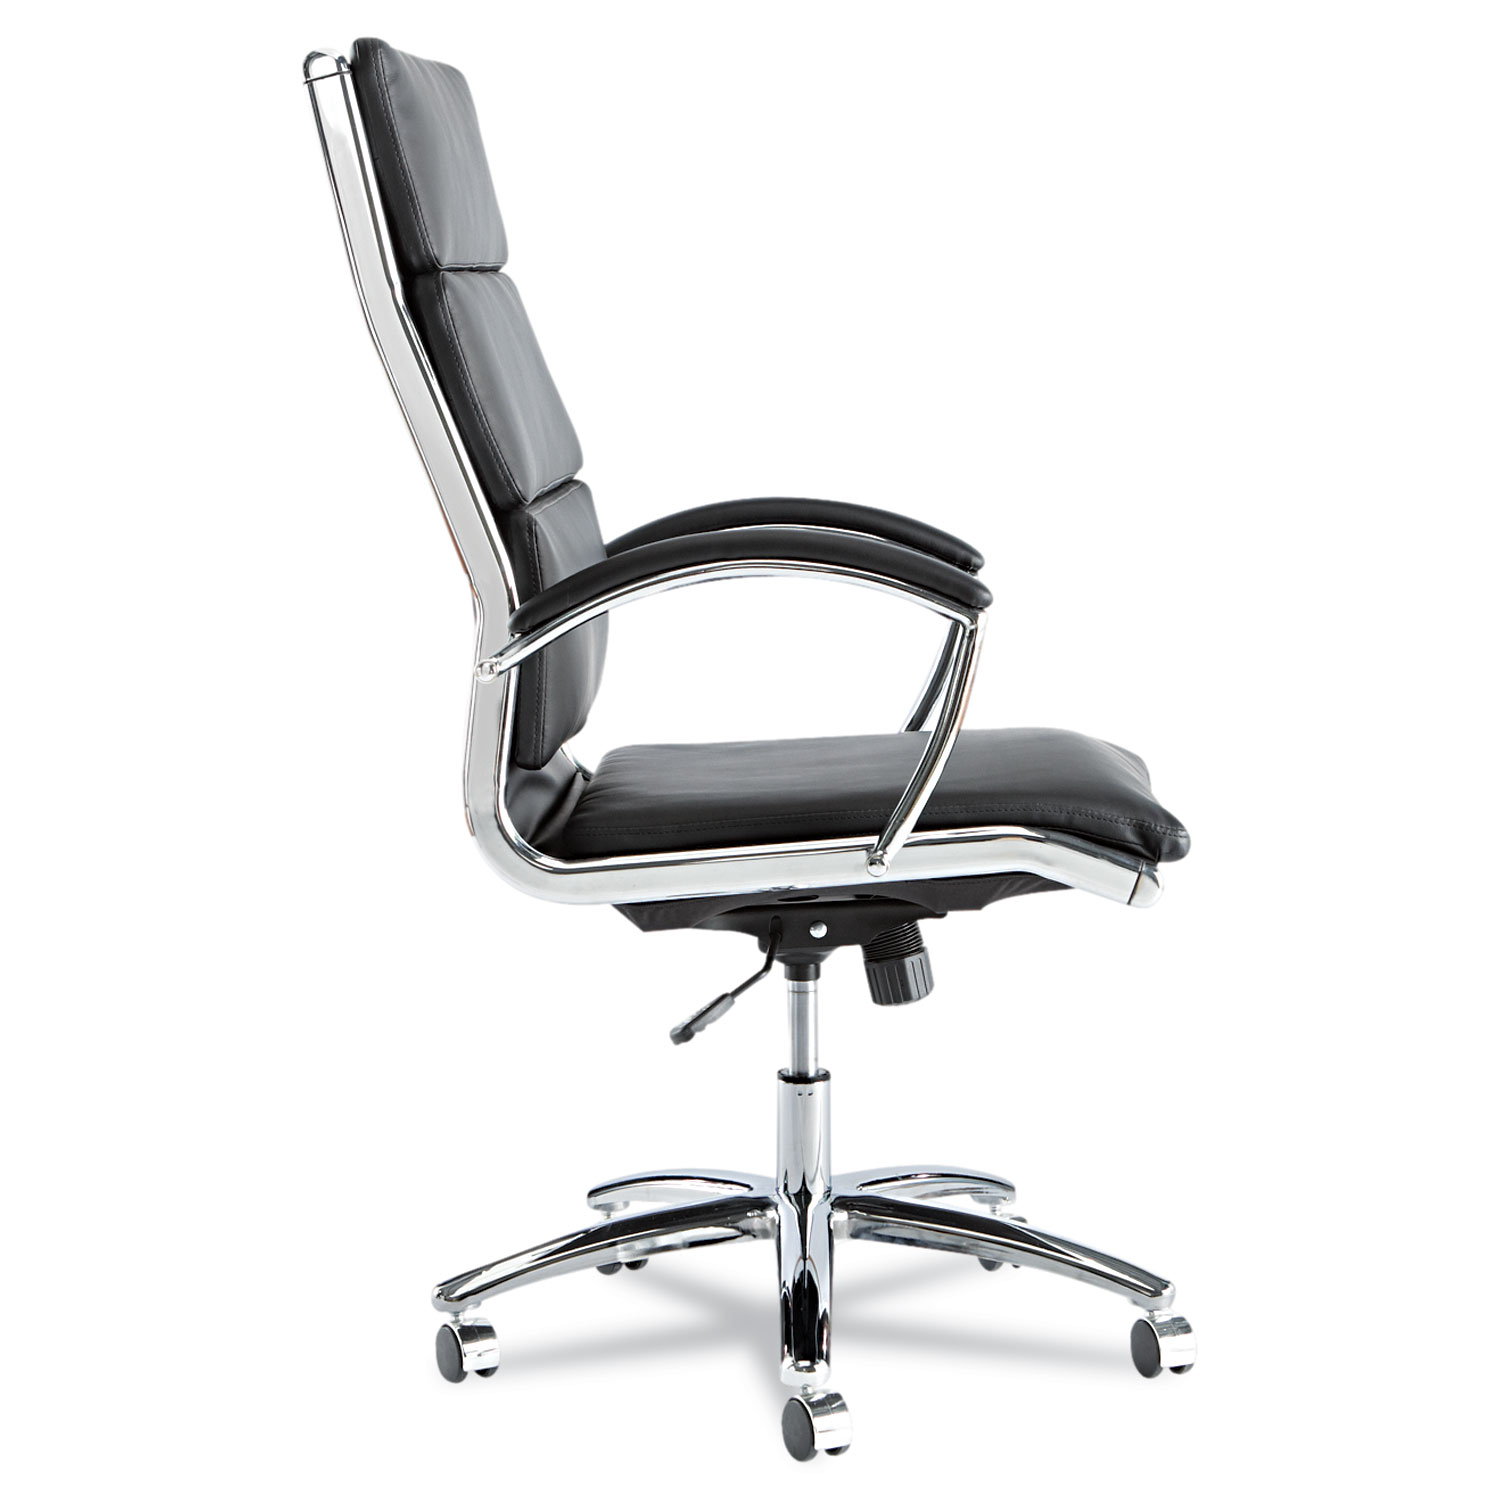 Alera Neratoli High-Back Slim Profile Chair, Faux Leather, 275 lb Cap, 17.32" to 21.25" Seat Height, Black Seat/Back, Chrome - image 3 of 10